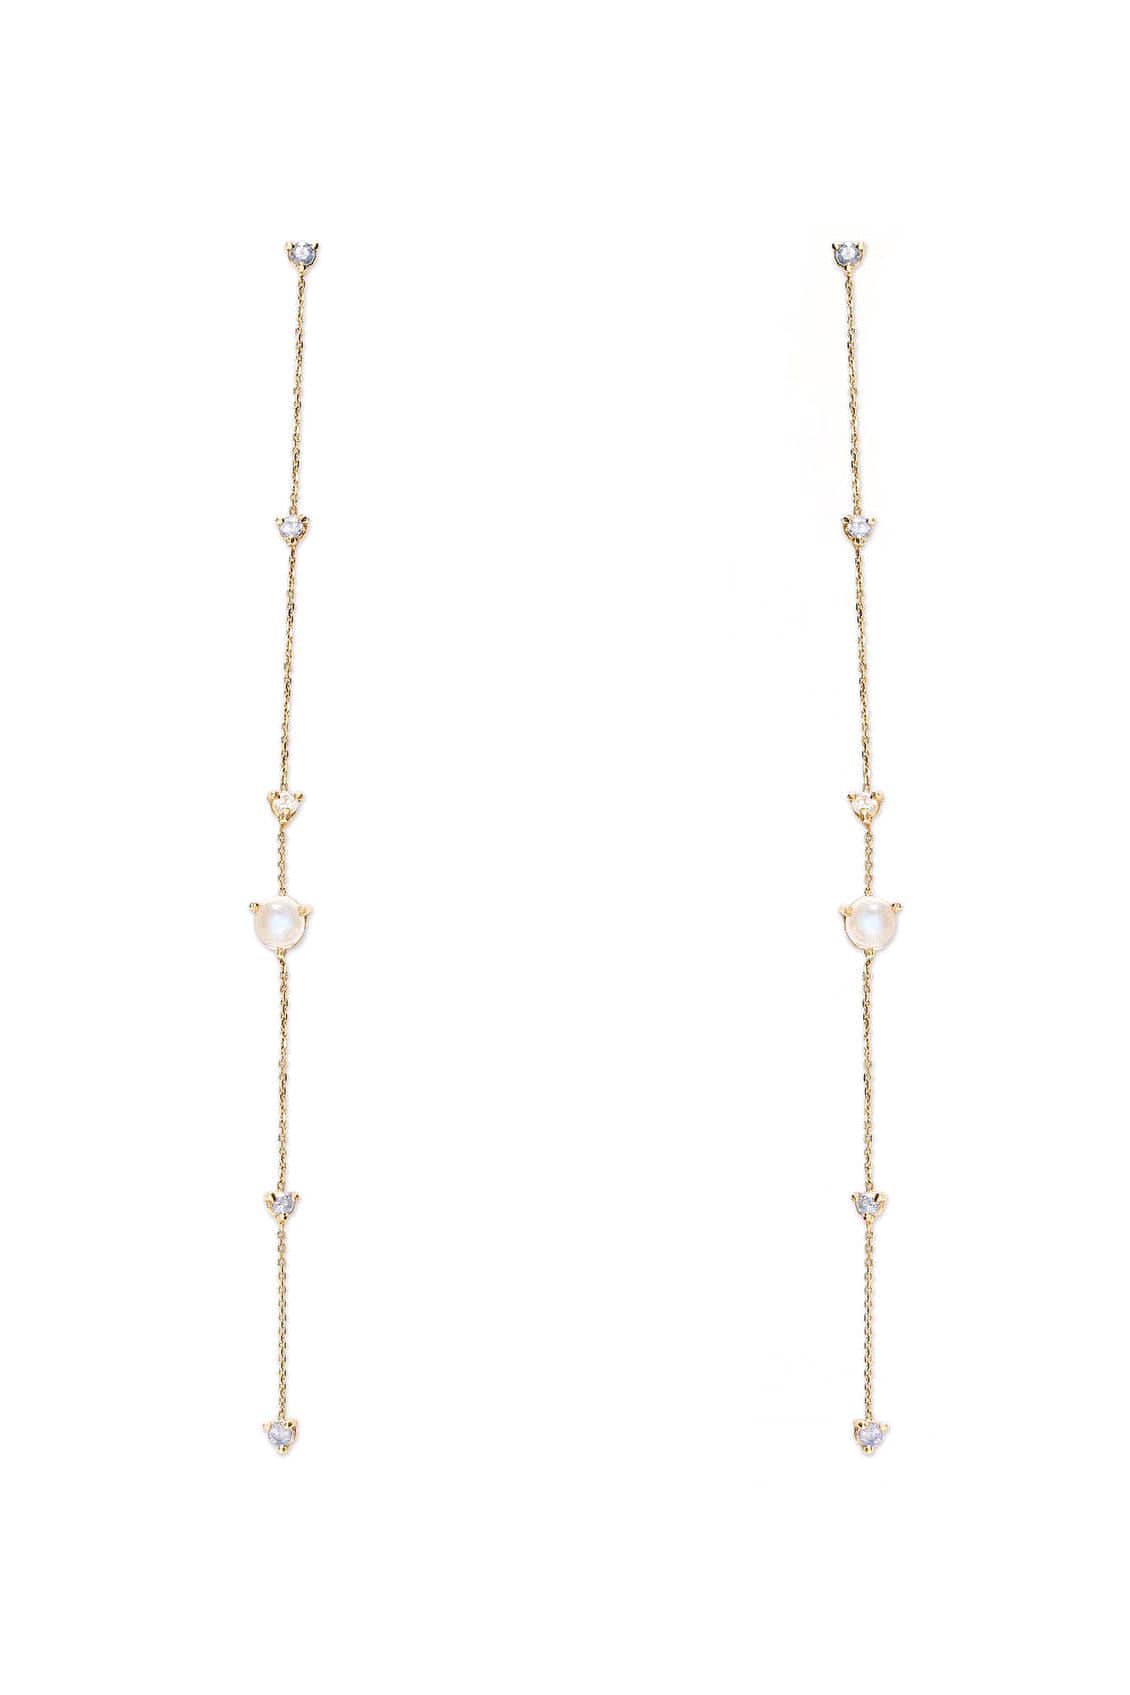 WWAKE-Tonal Linear Chain Earrings-YELLOW GOLD